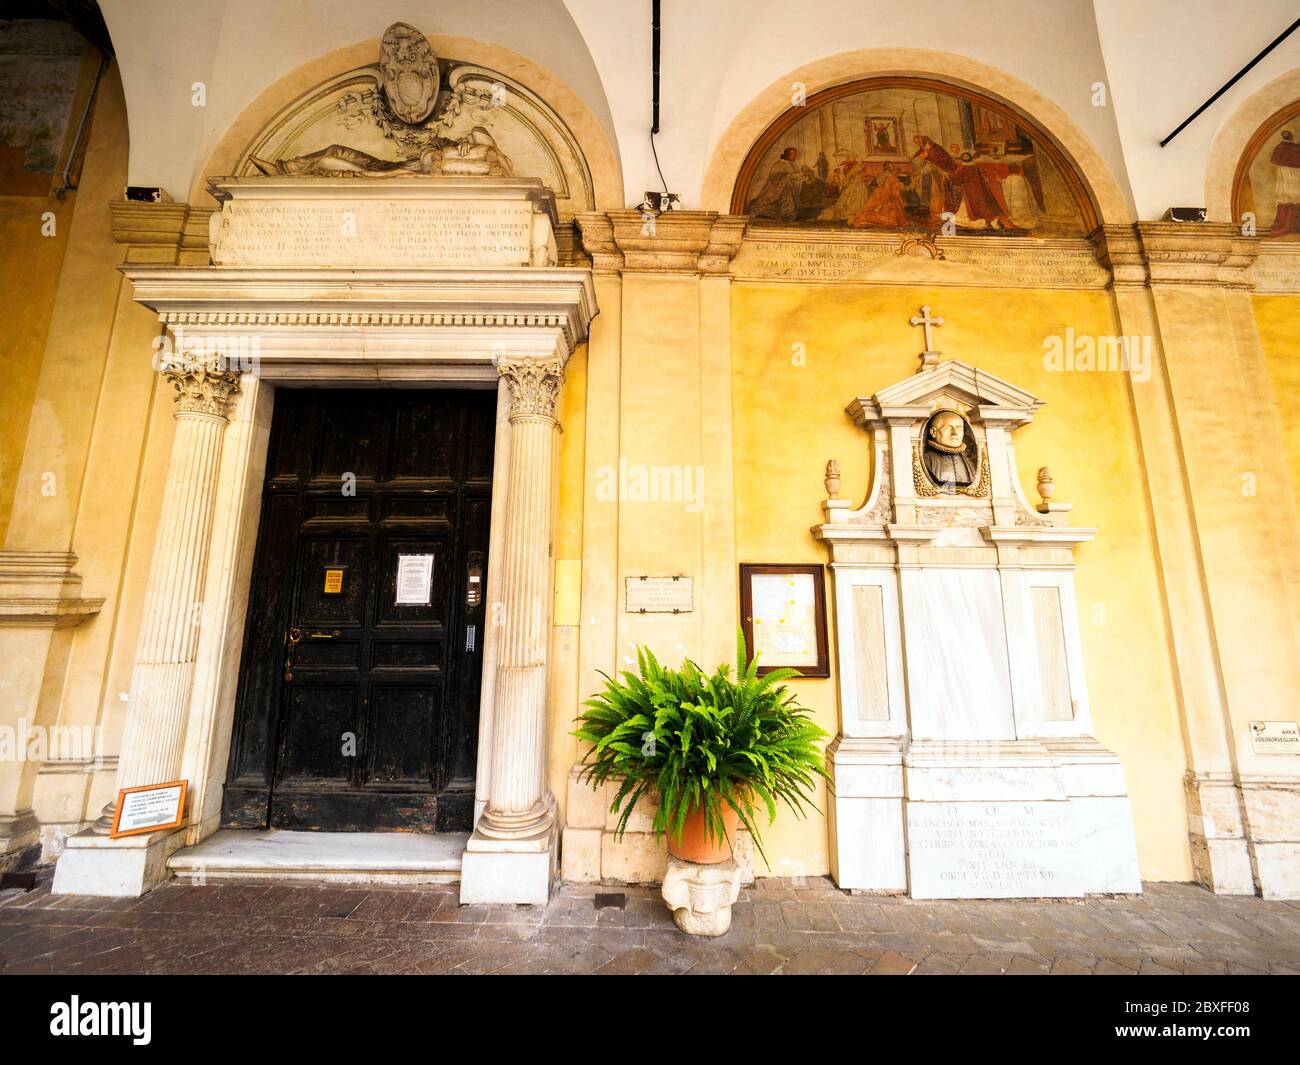 Tombstone in the courtyard of the  church San Gregorio al Celio - Rome, Italy Stock Photo